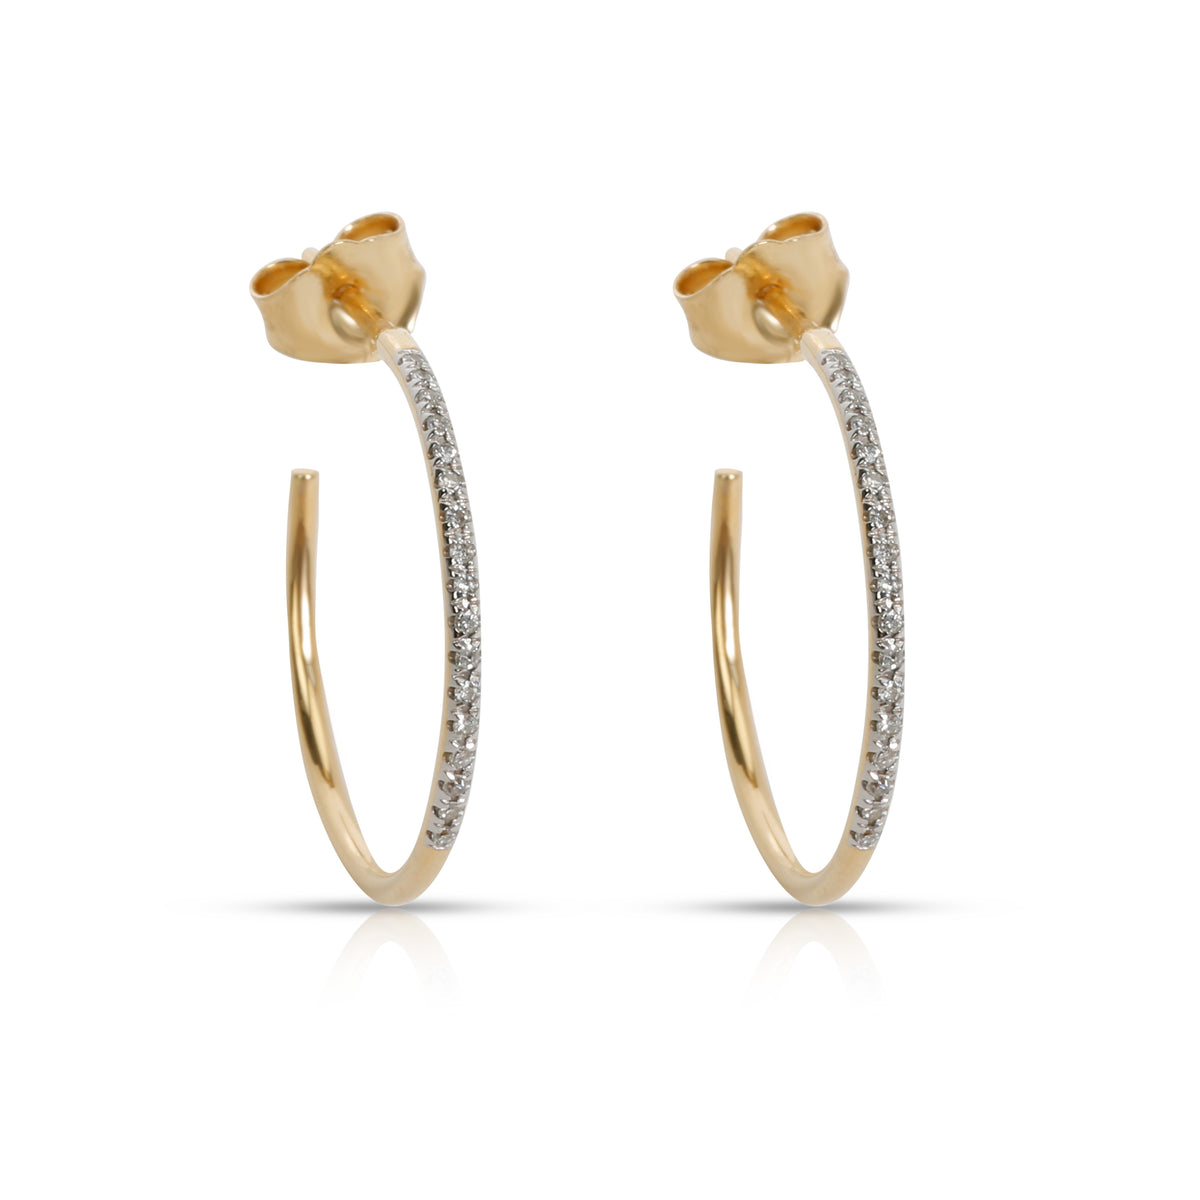 Round Cut Diamond Hoop Earring in 14K Yellow Gold 0.1 CTW